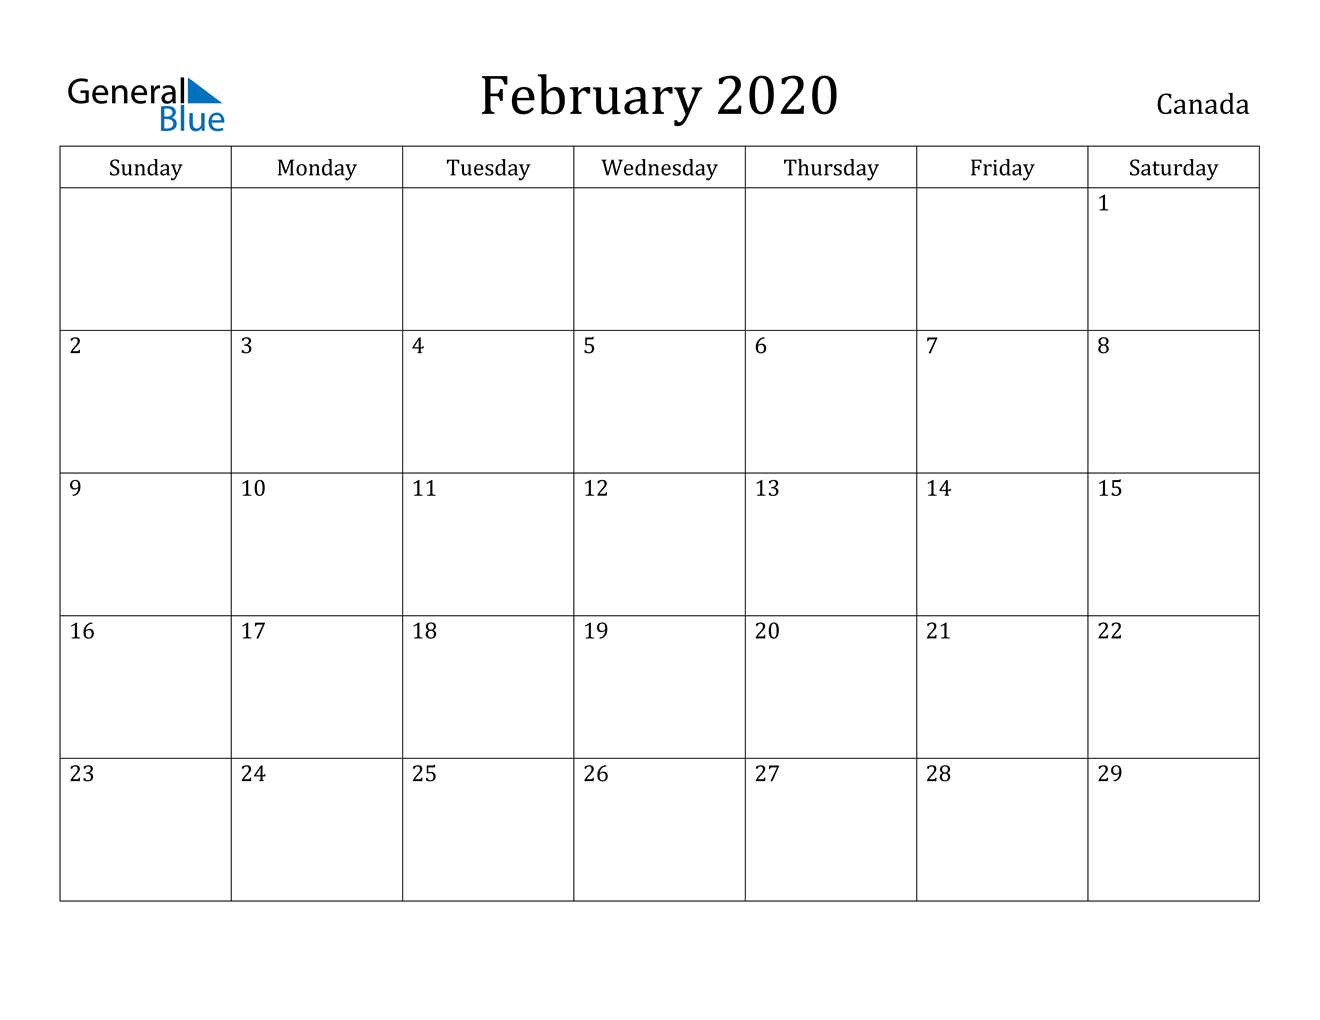 February 2020 Calendar - Canada